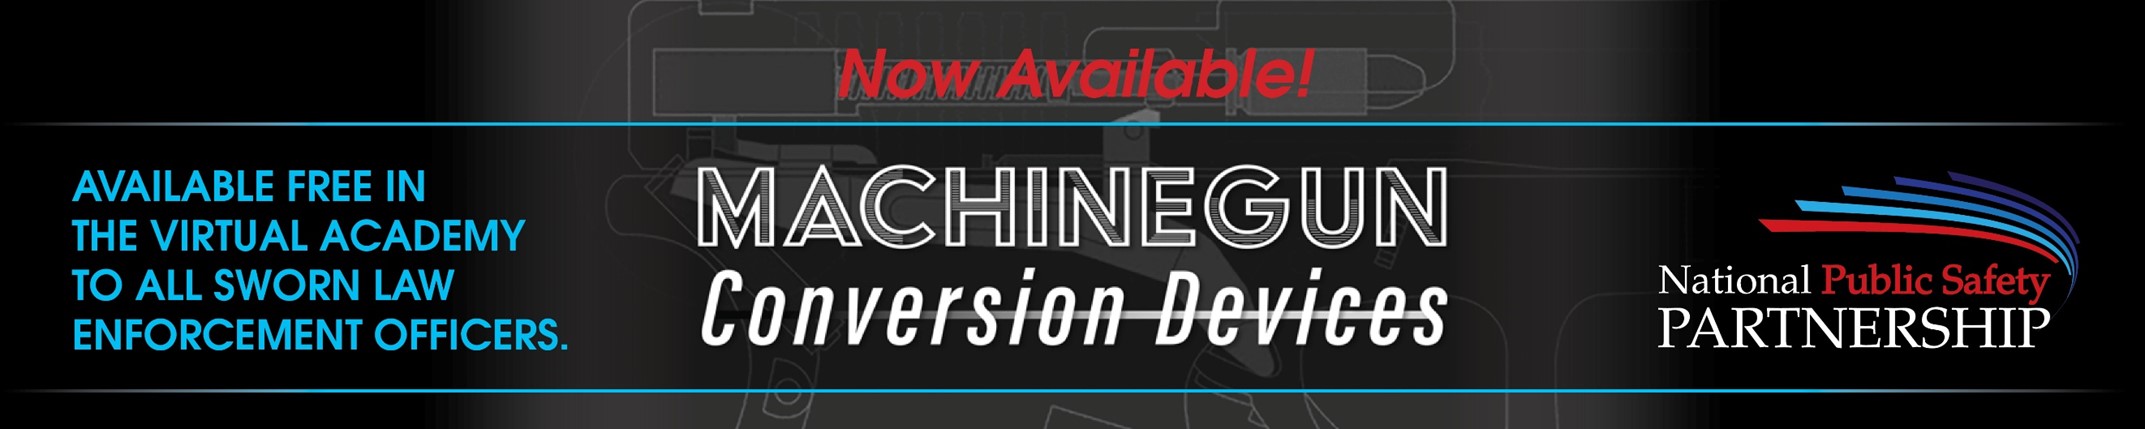 Machinegun Conversion Devices Course Now Available